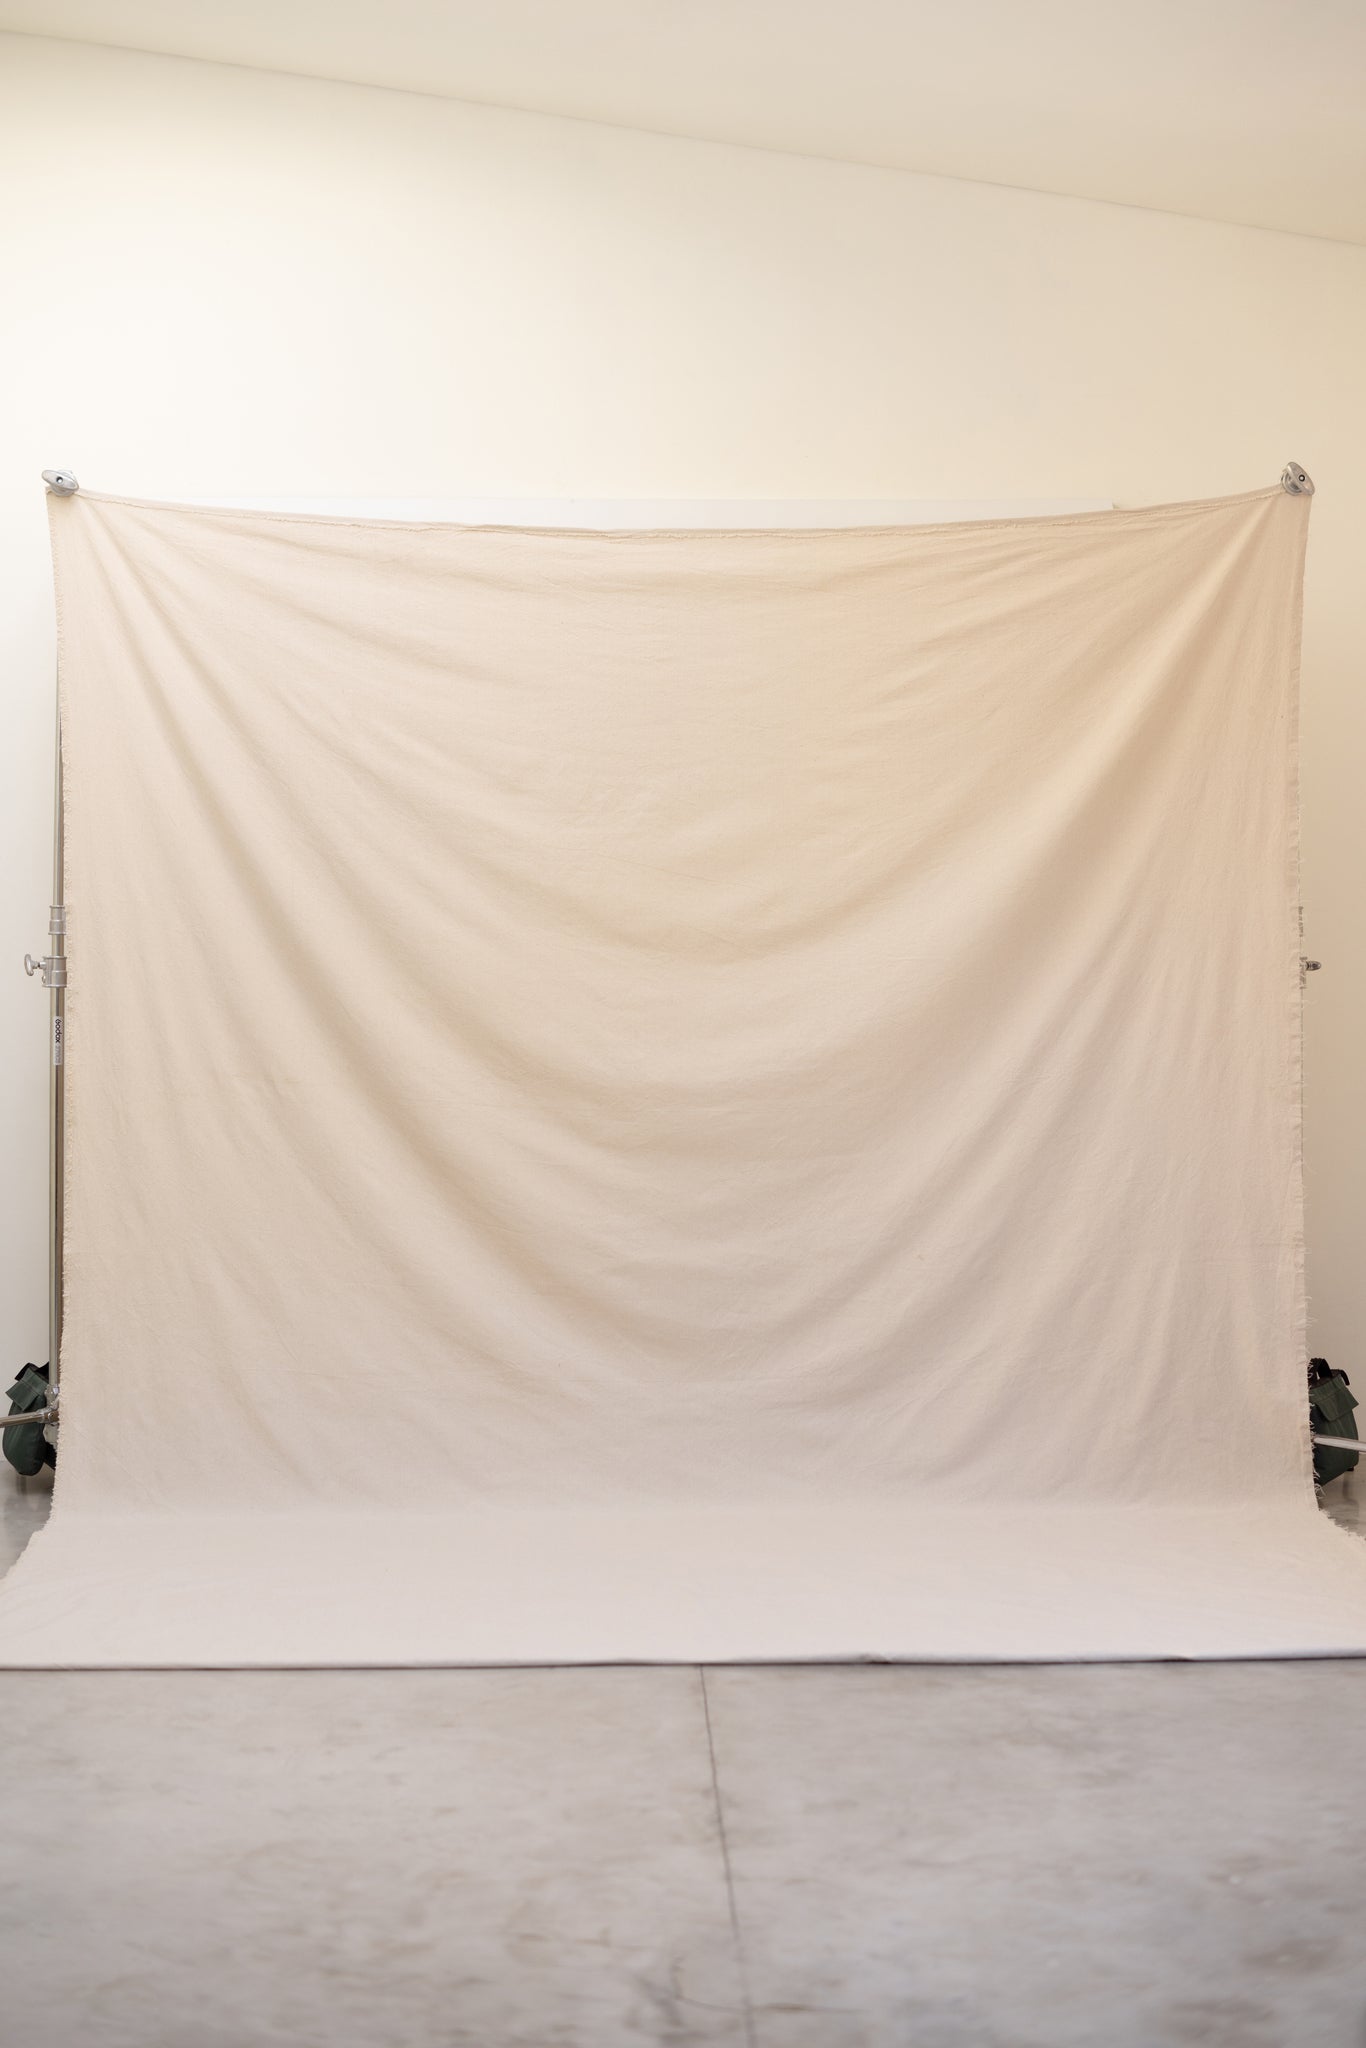 [3x3.75m] Canvas Backdrop Milky White